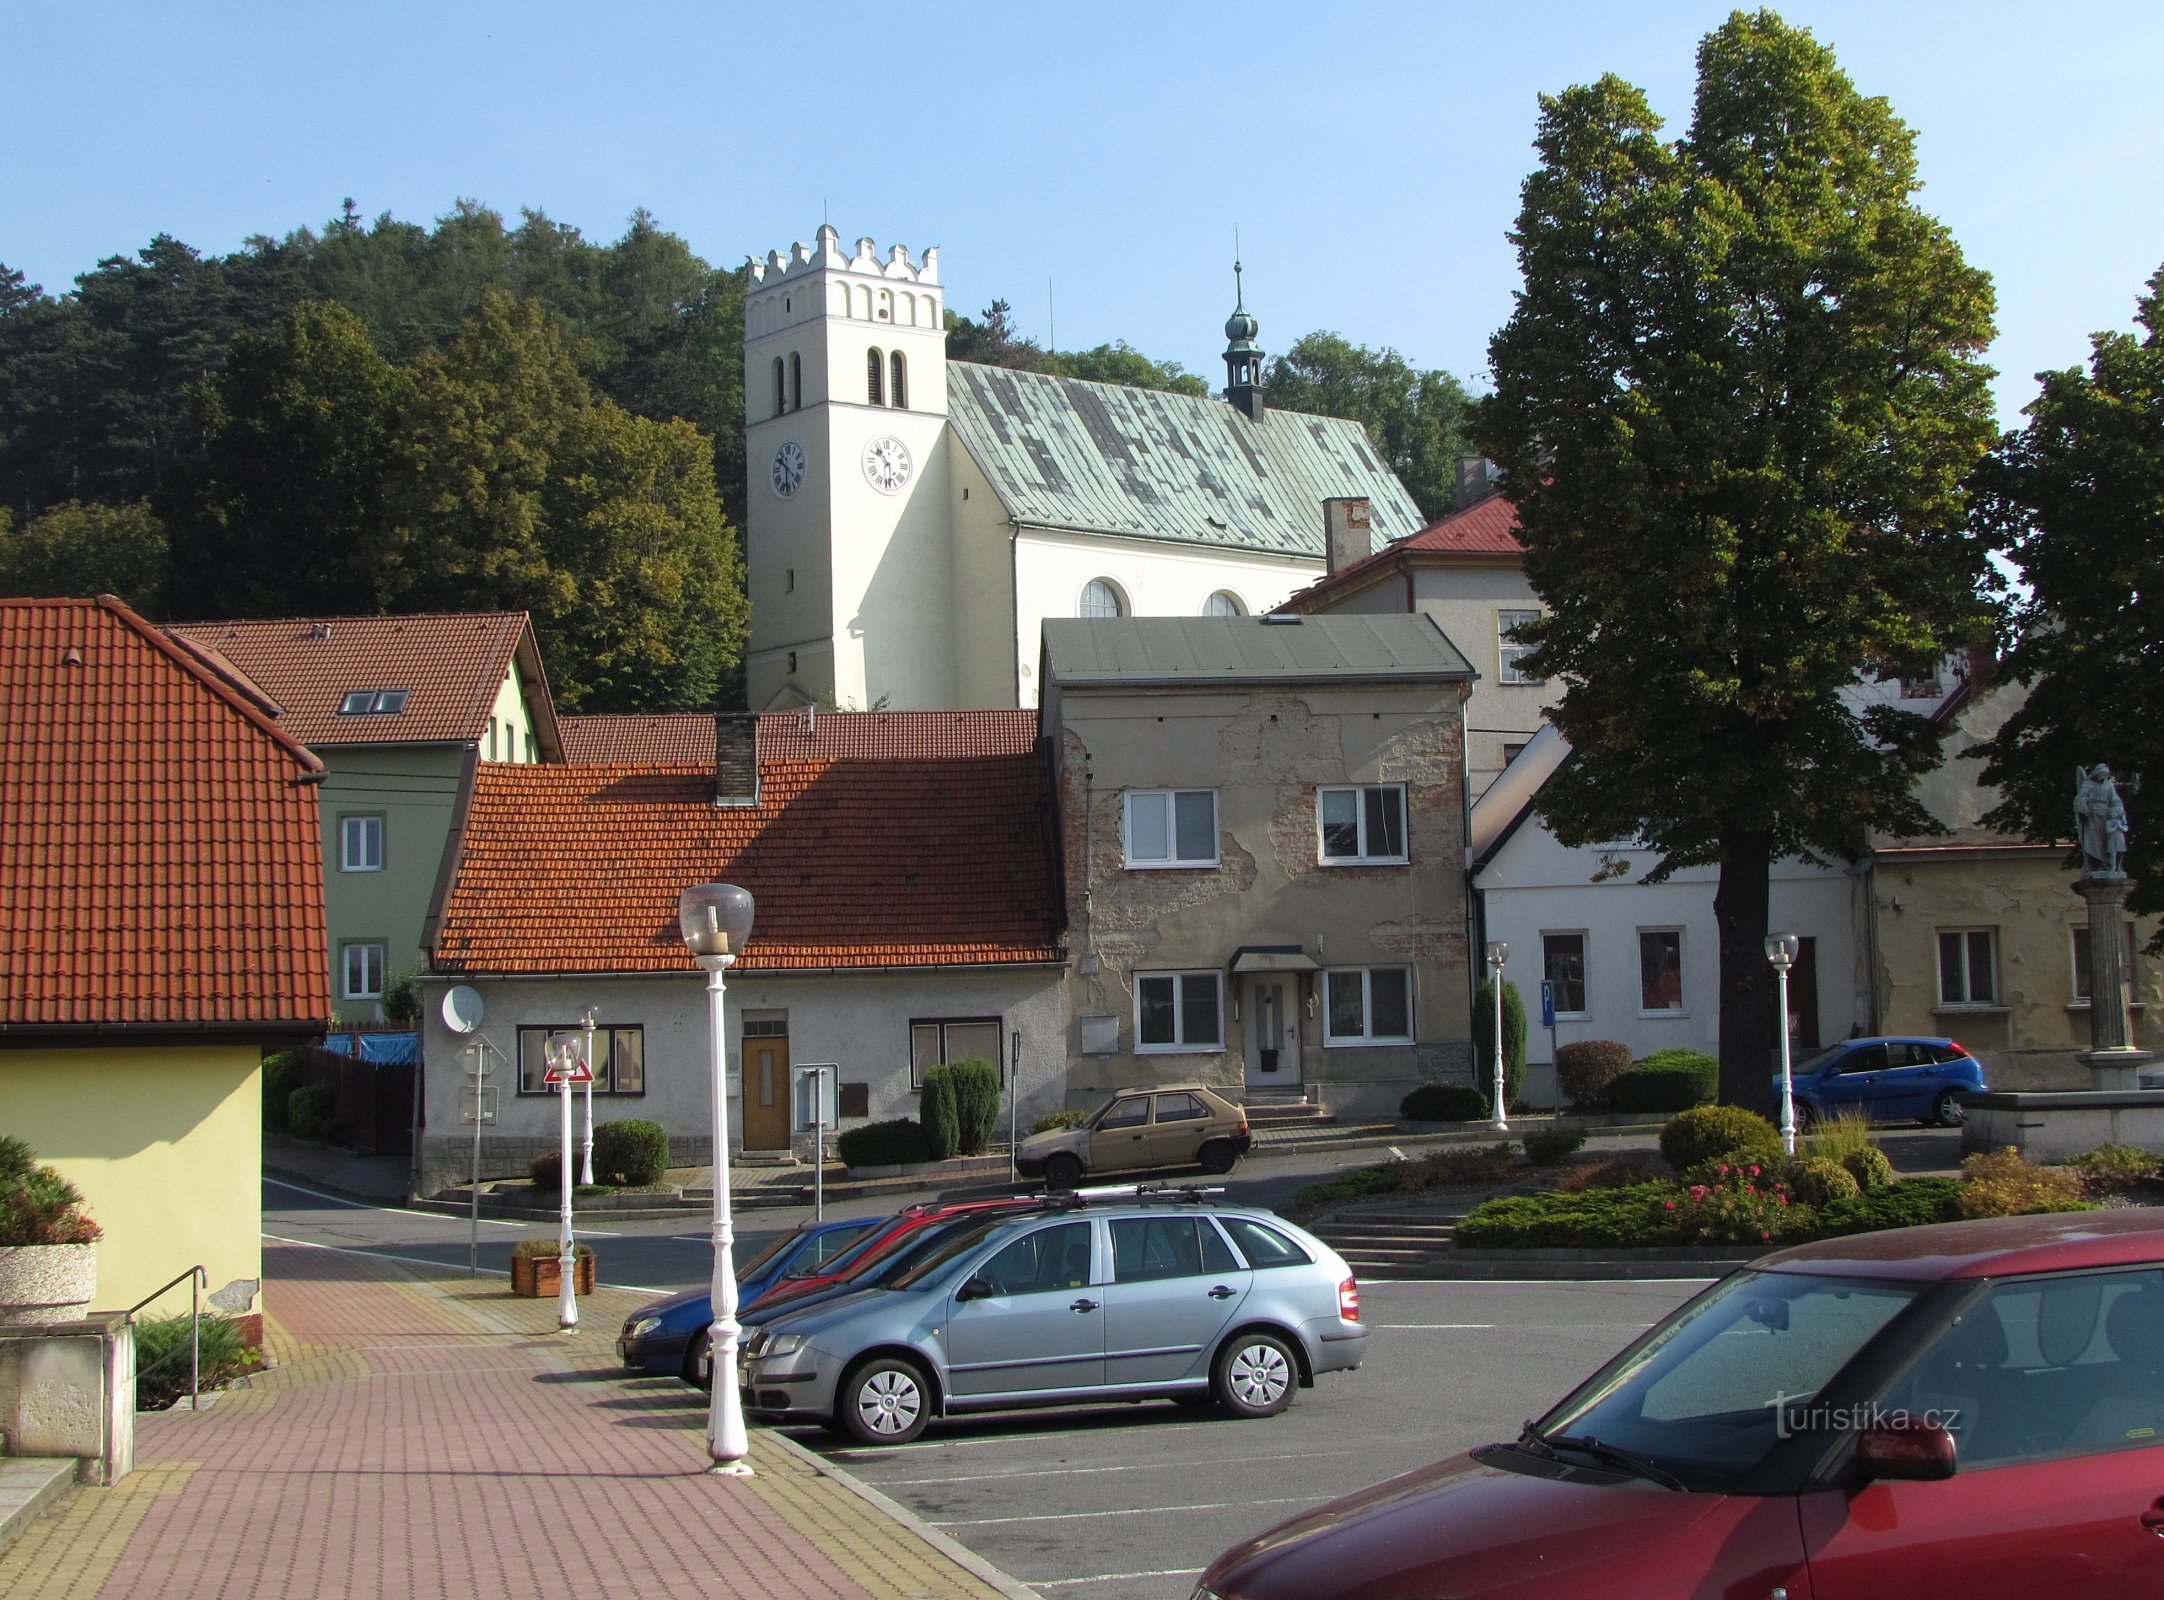 Starý Jičín - Pyhän Václavin kirkko